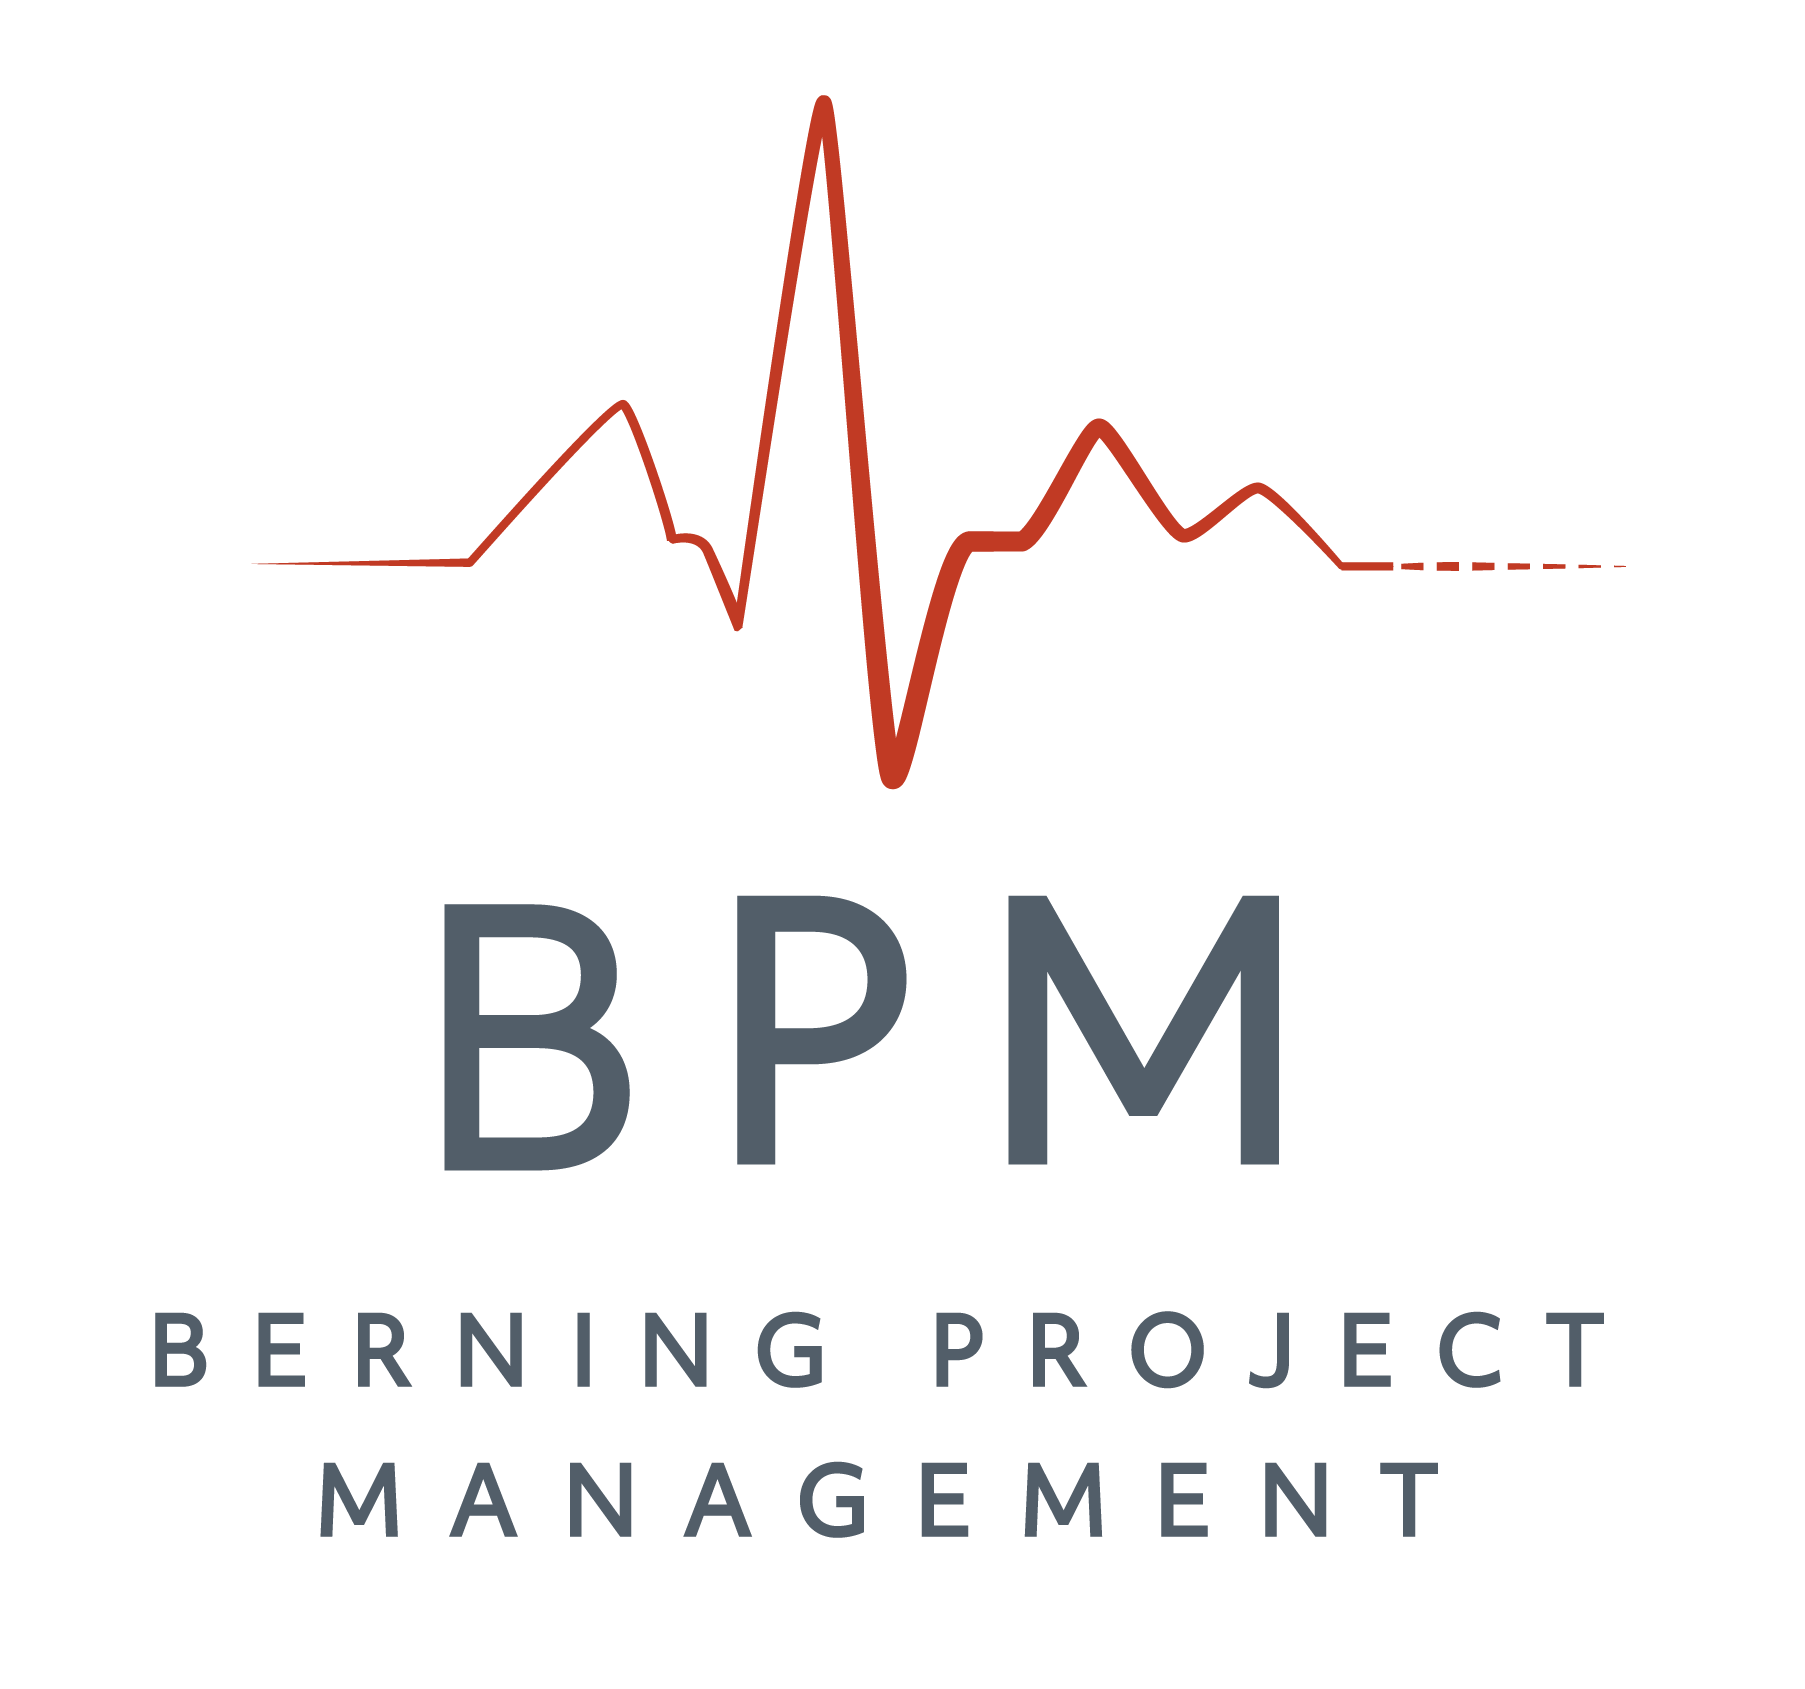 Berning Project Management